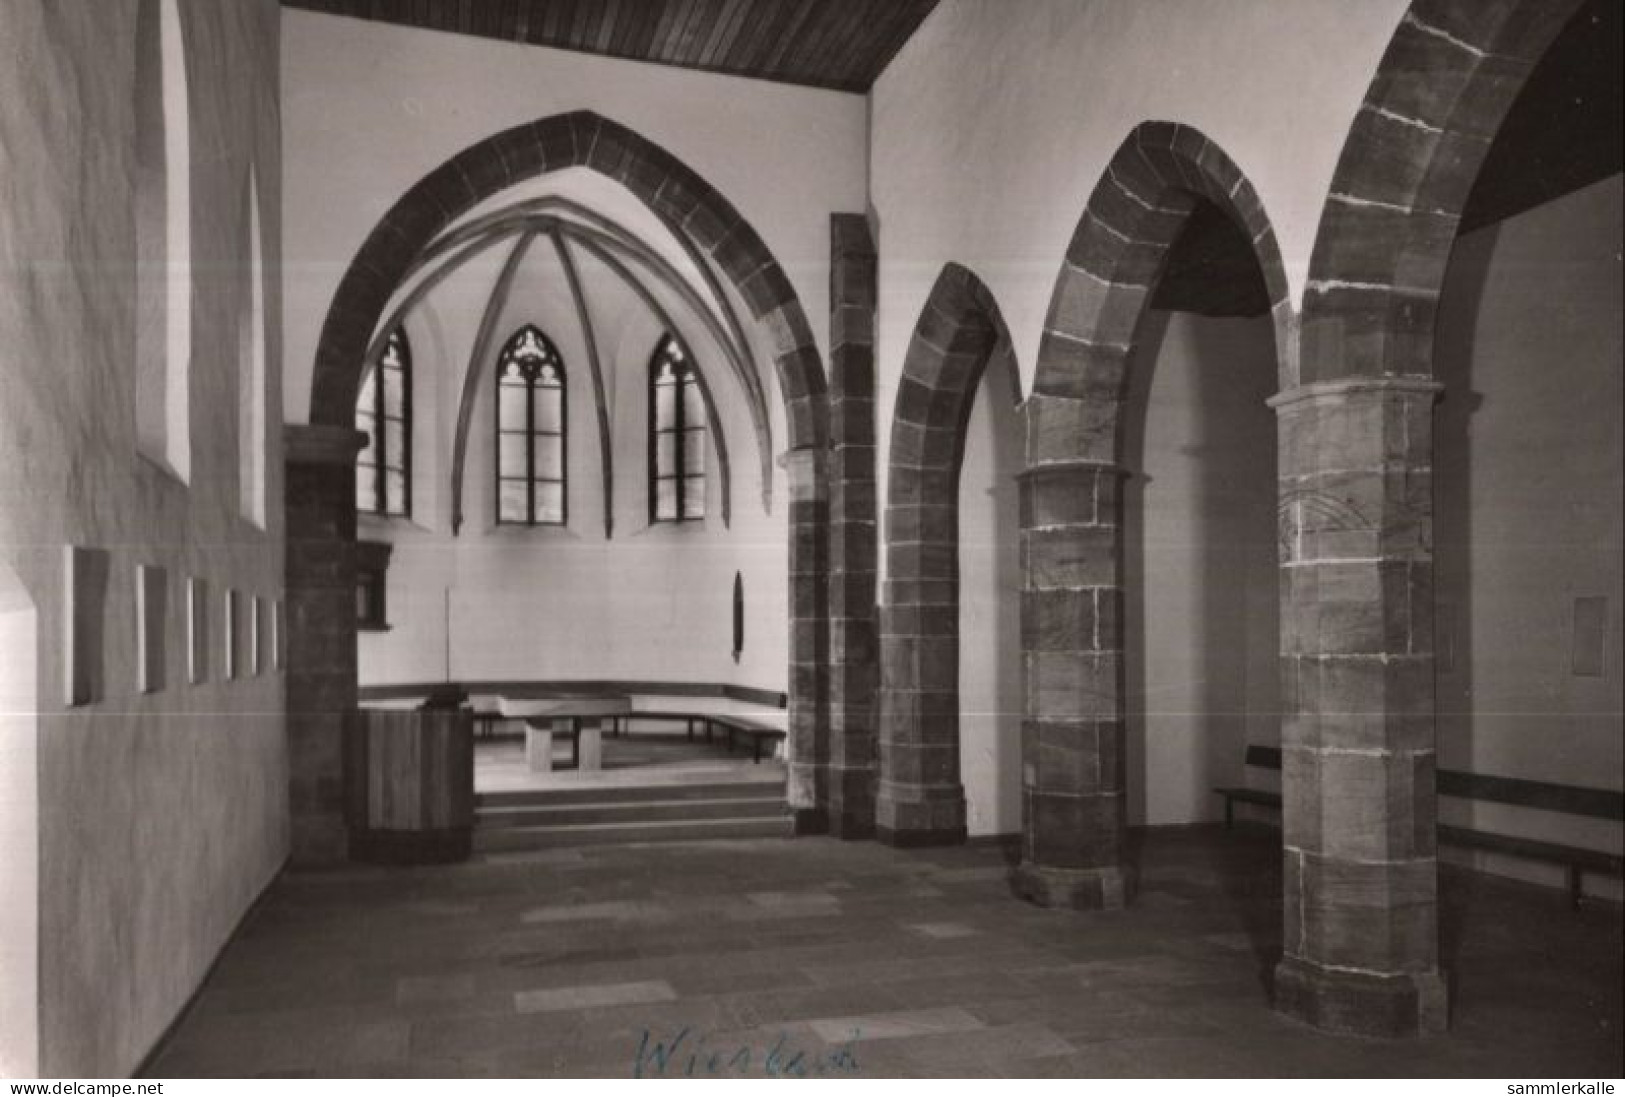 136615 - Wiesbach, Pfalz - Dietrich-Bonhoeffer-Kirche - Pirmasens